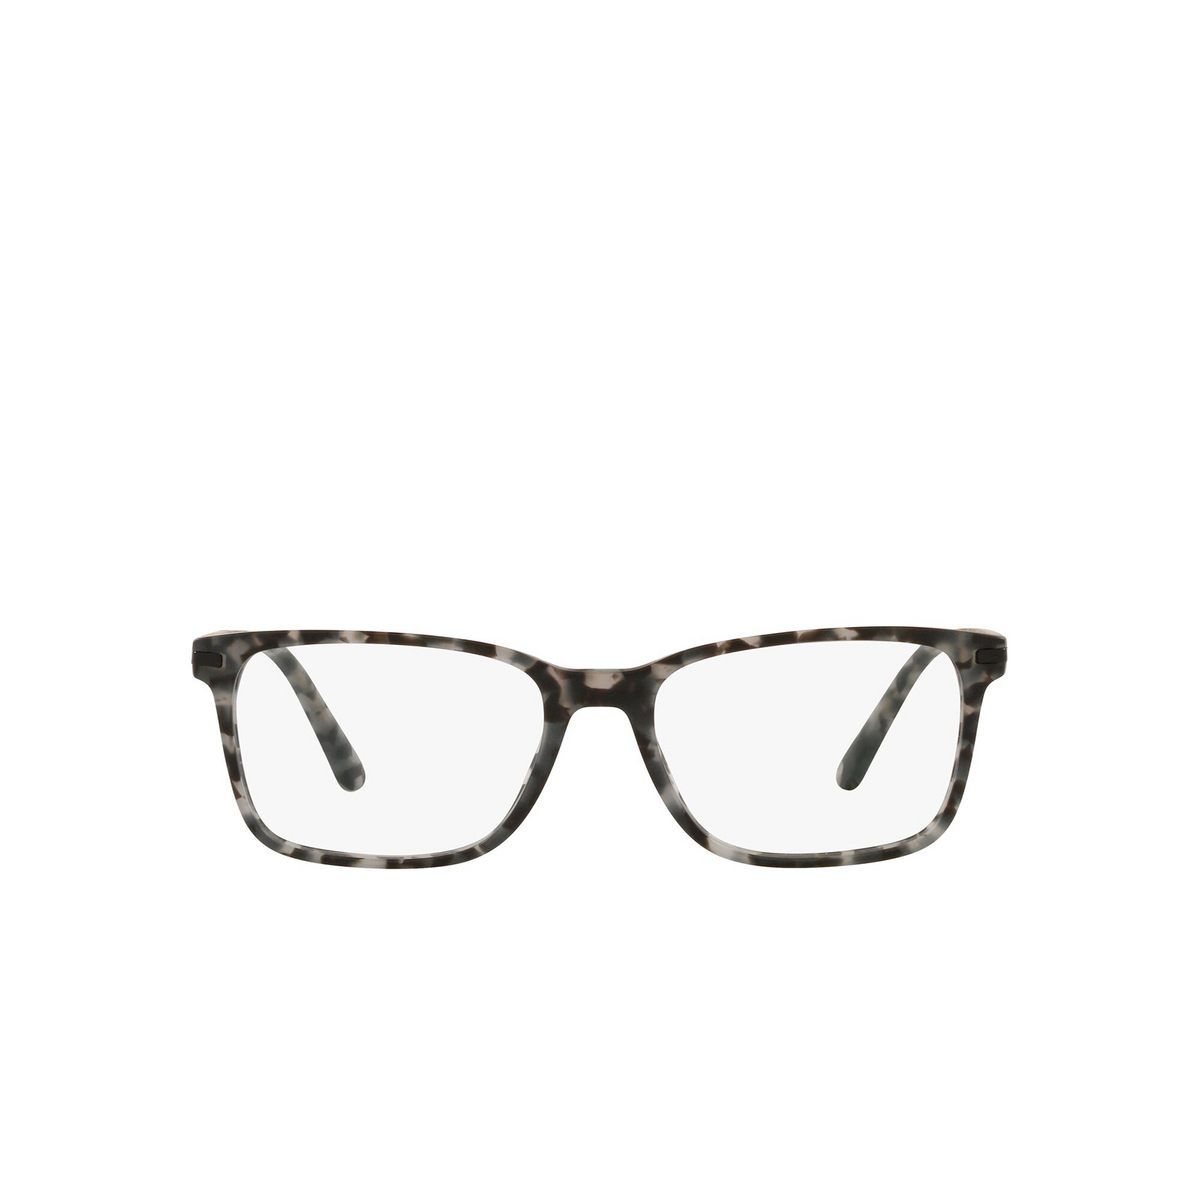 Prada® Square Eyeglasses: PR 14WV color Matte Grey Tortoise VH31O1 - front view.